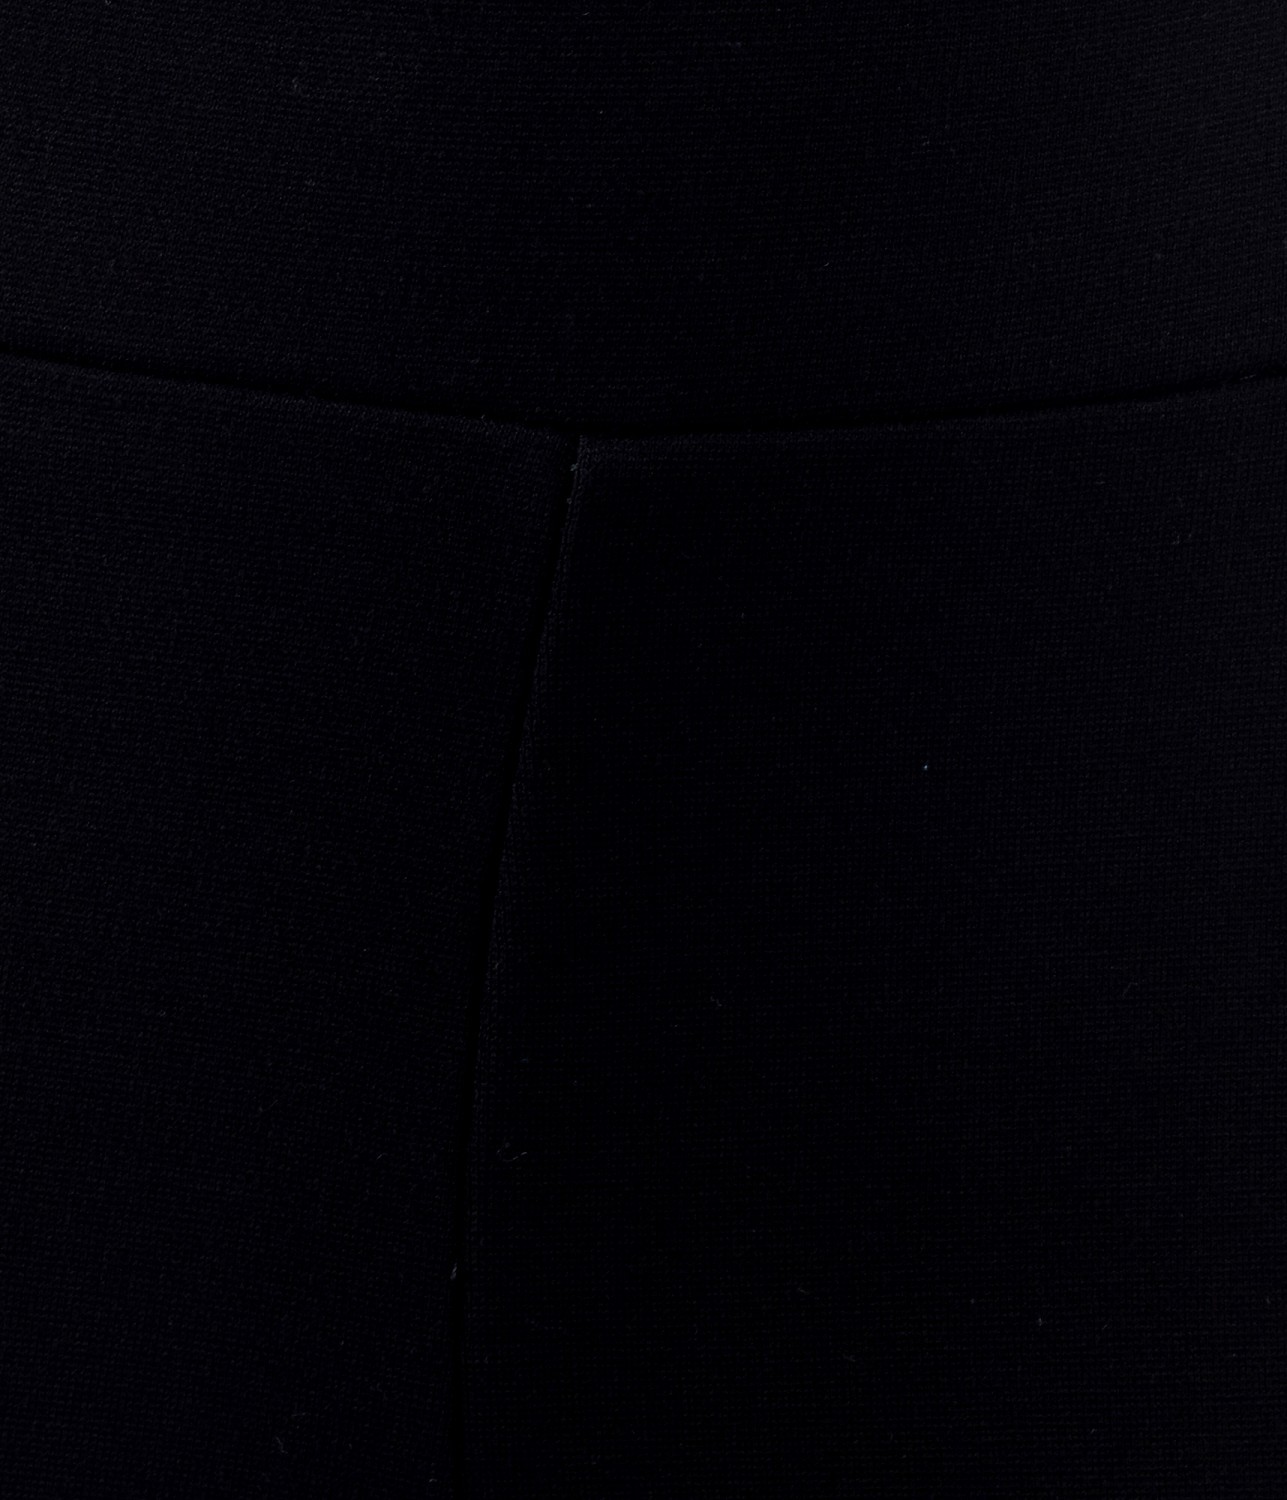 Camaieu divatos ruházat nadrág 2013.8.10 fotója